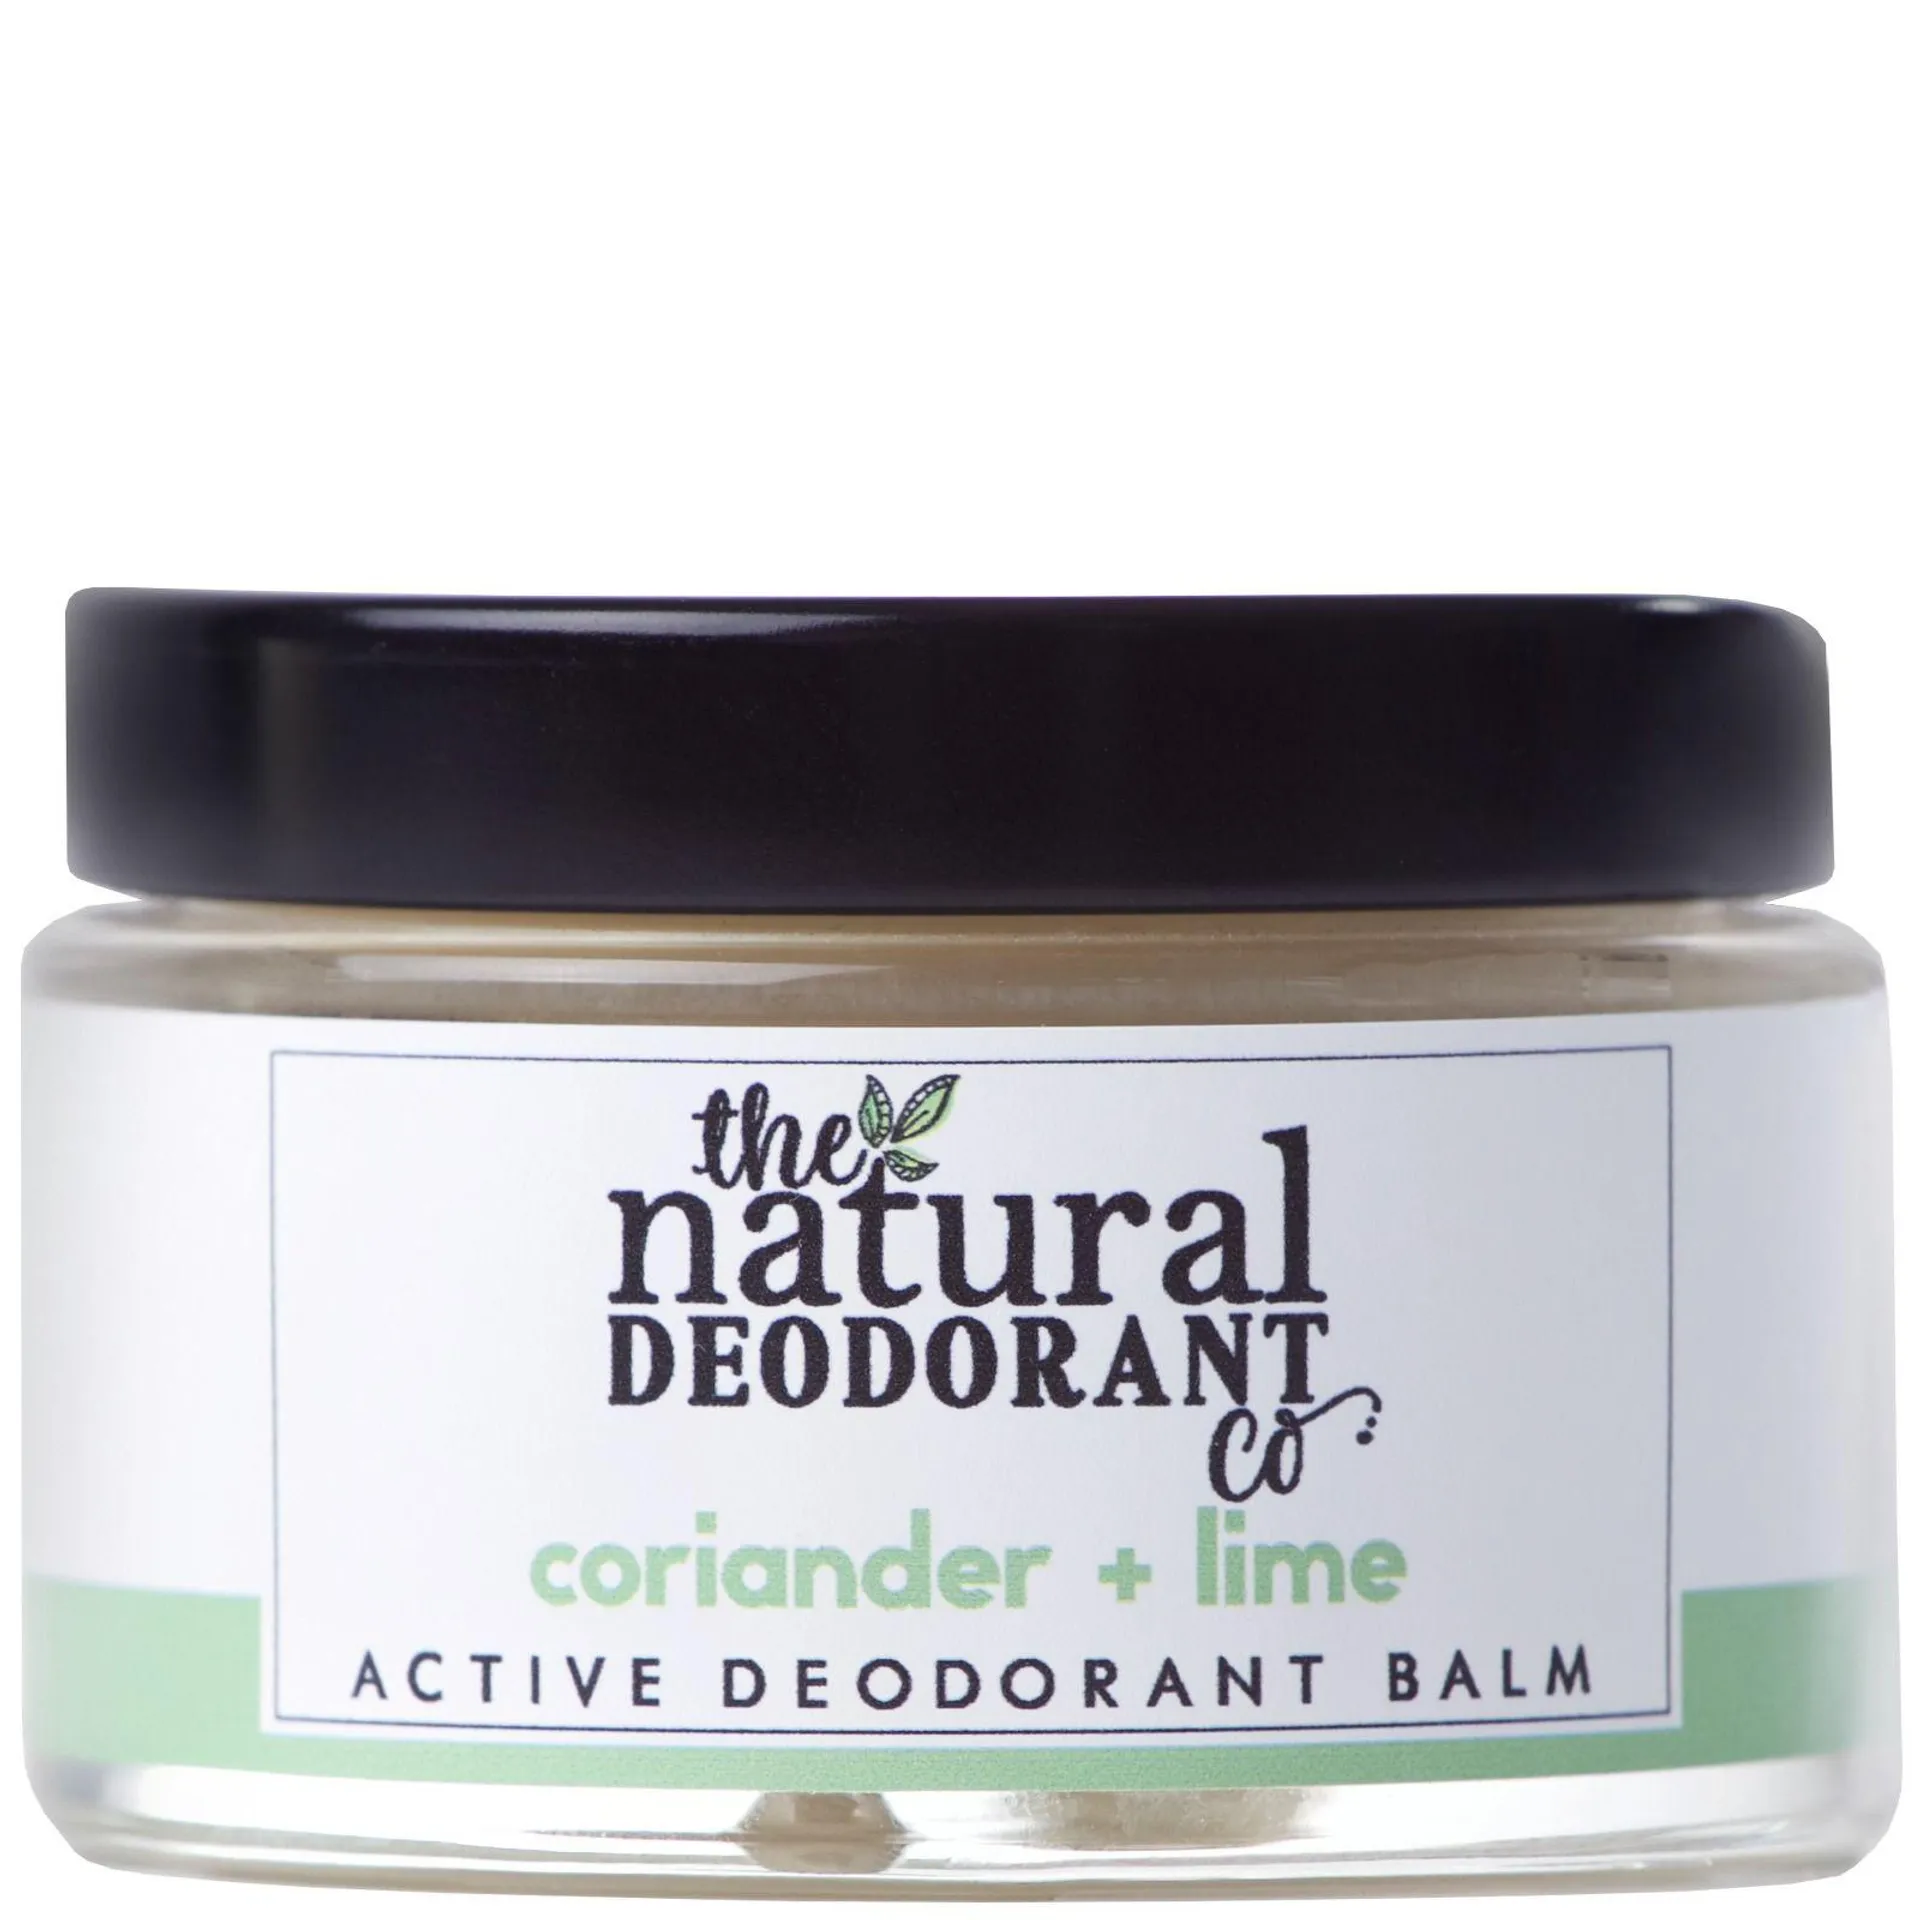 The Natural Deodorant Co. Active Deodorant Balm